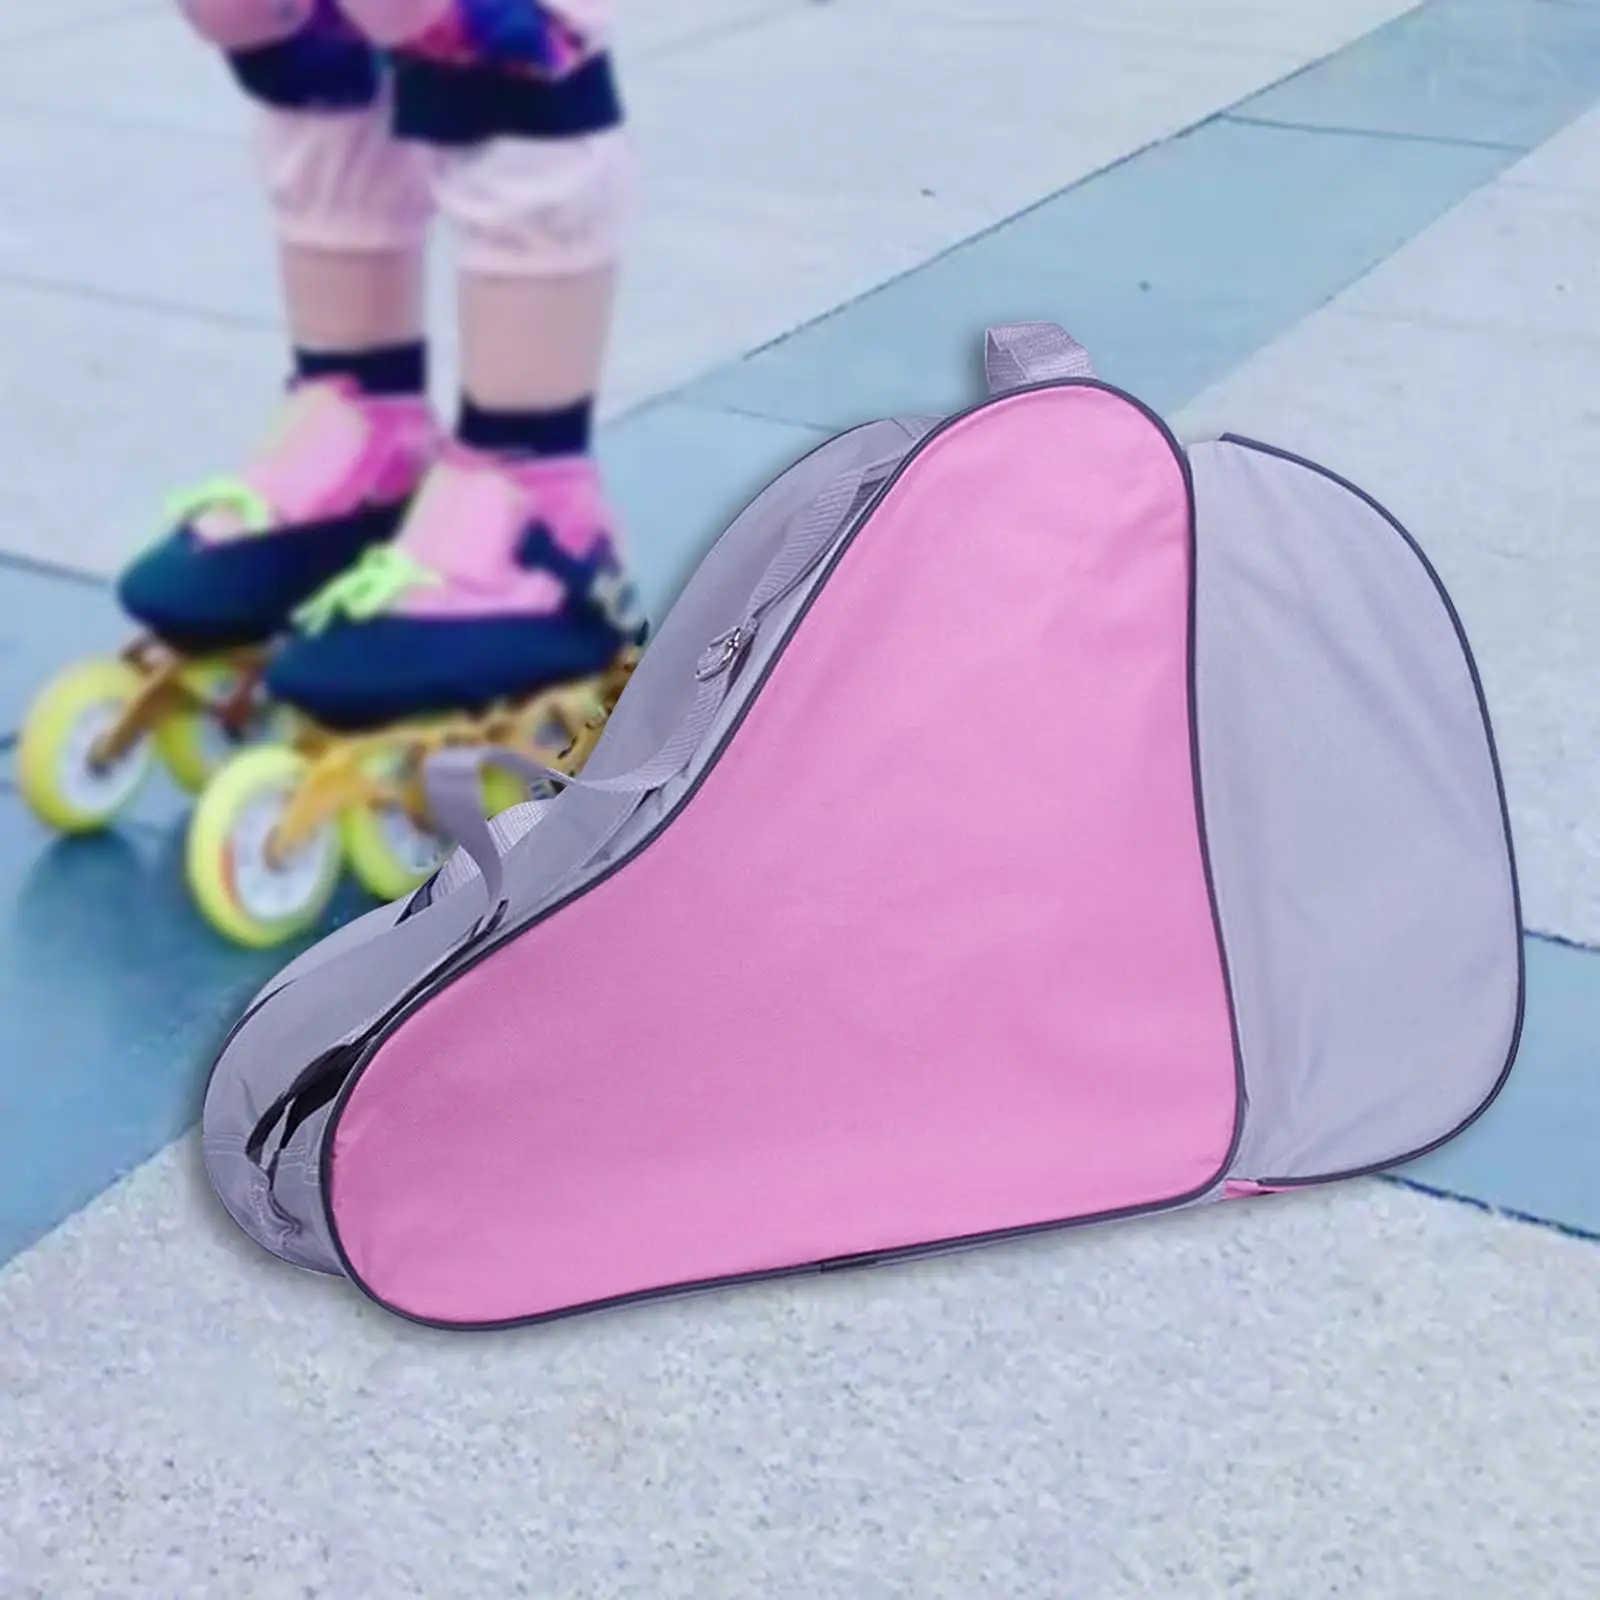 Roller Skate Bag Skate Accessories Women Men Adults Kids Large Capacity Case Skate Carry Bag for Quad Skates Ice Hockey Skate